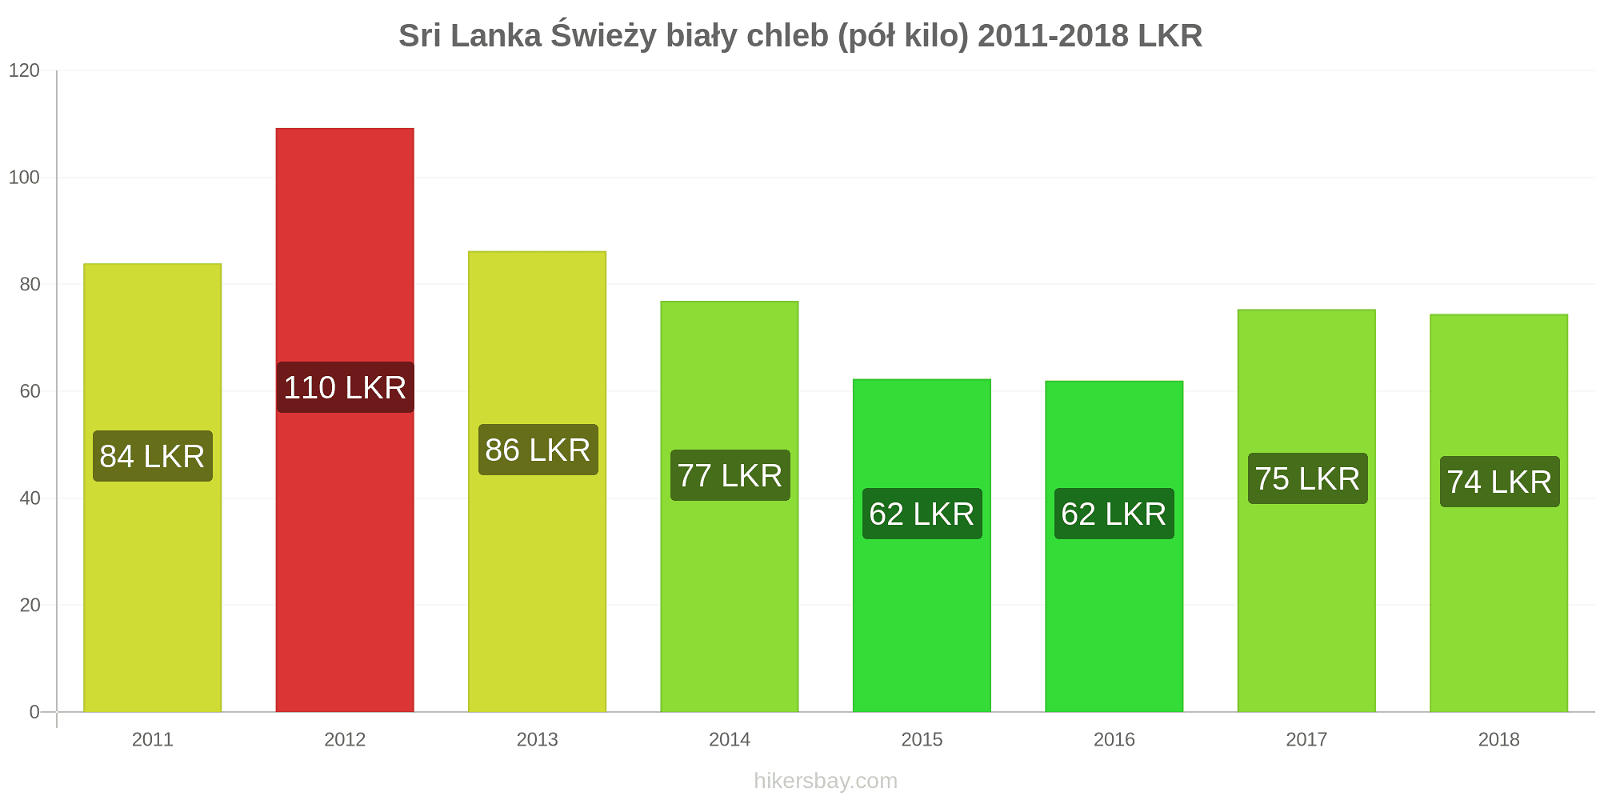 Sri Lanka zmiany cen Chleb pół kilo hikersbay.com